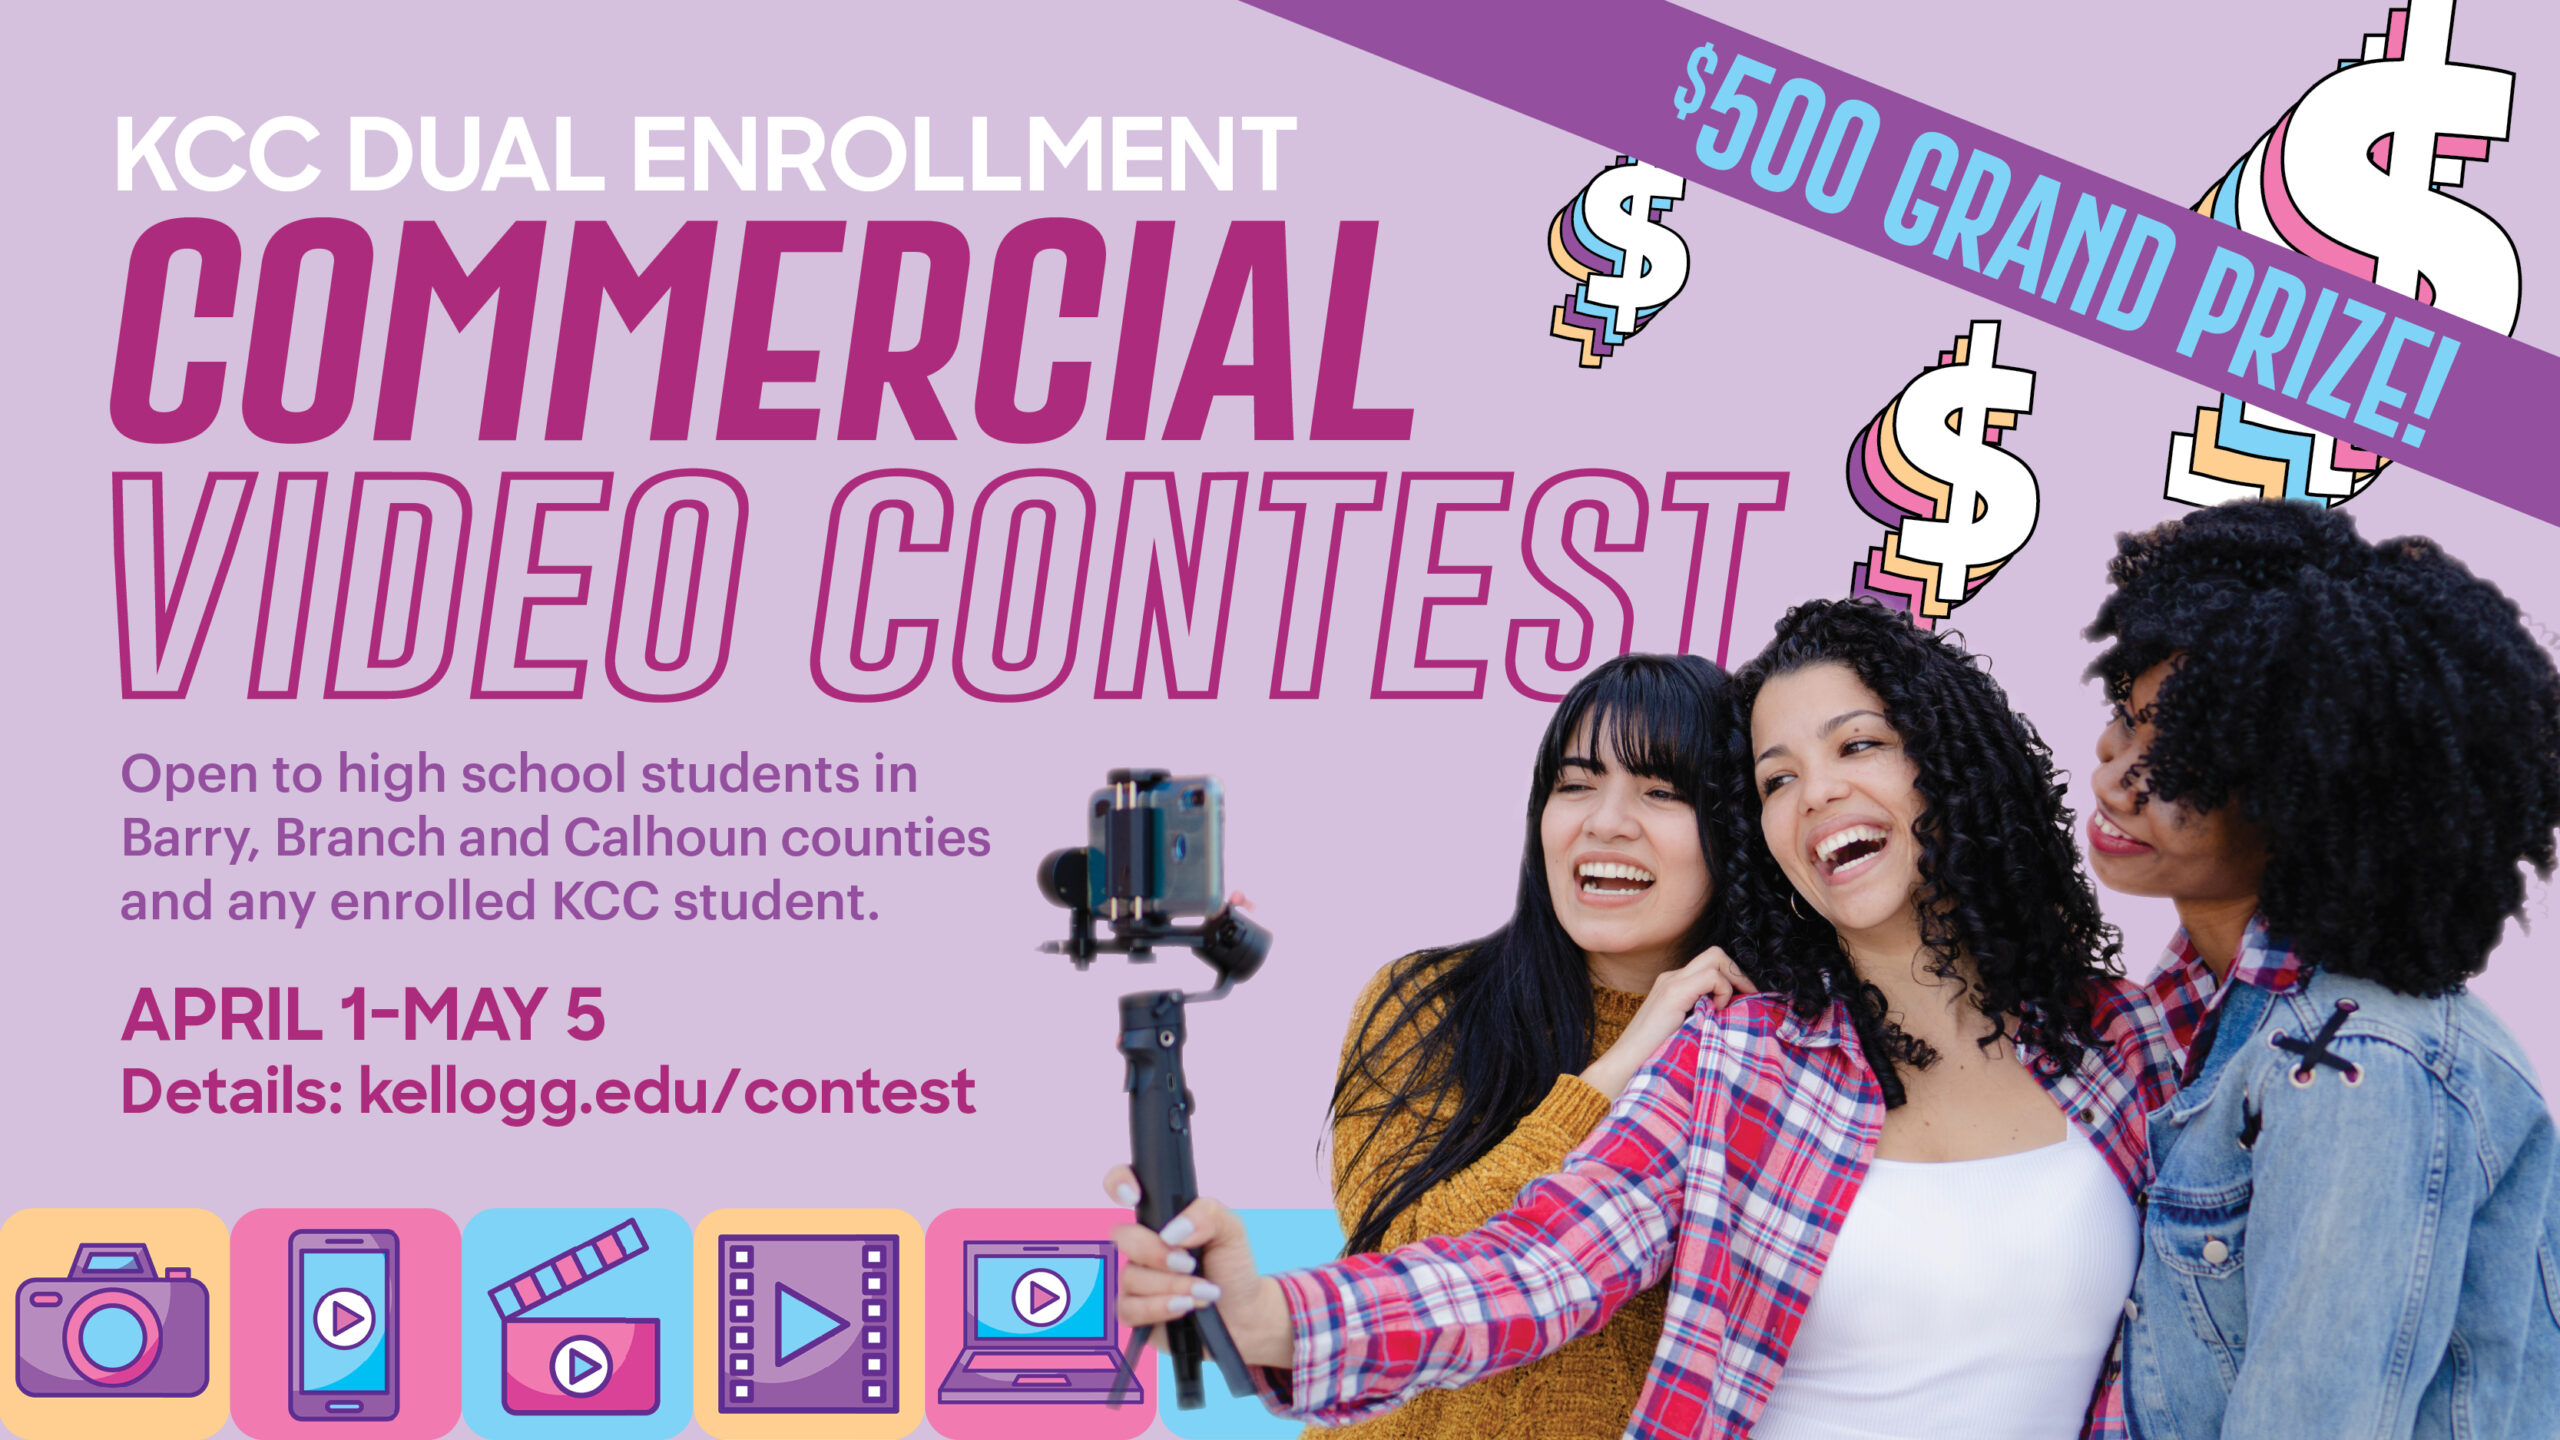 KCC Dual Enrollment Commercial Video Contest Kellogg Community College